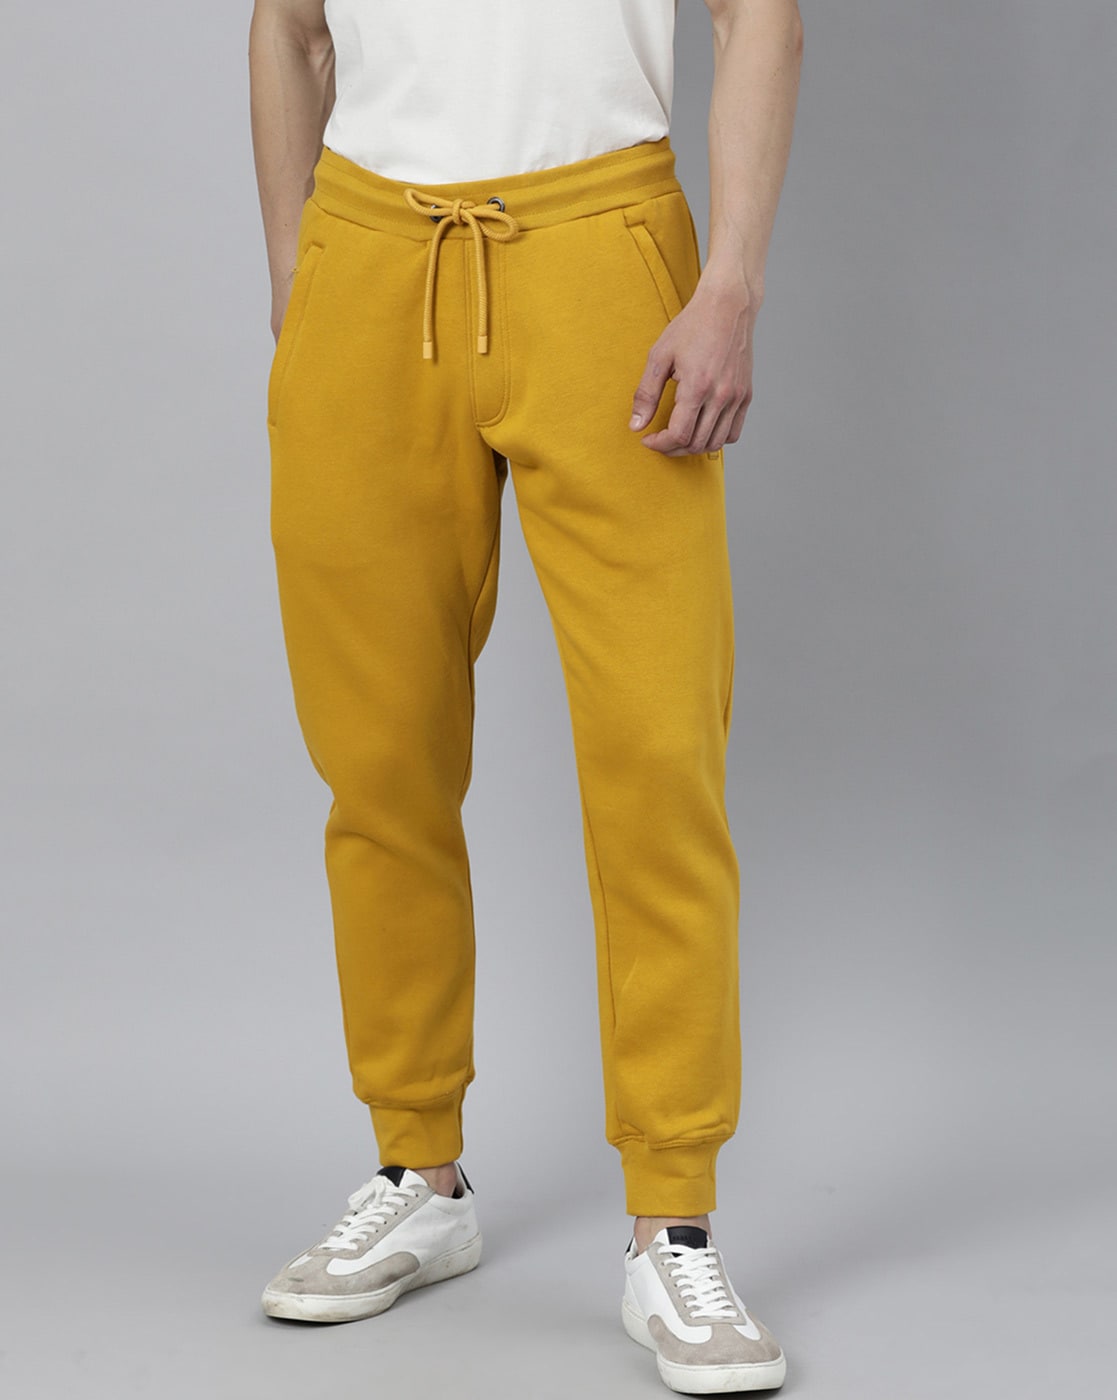 Shiny Metallic Gold Pants with Ankle Zippers | Stylish men wear, Metallic  pants, Mens leather pants